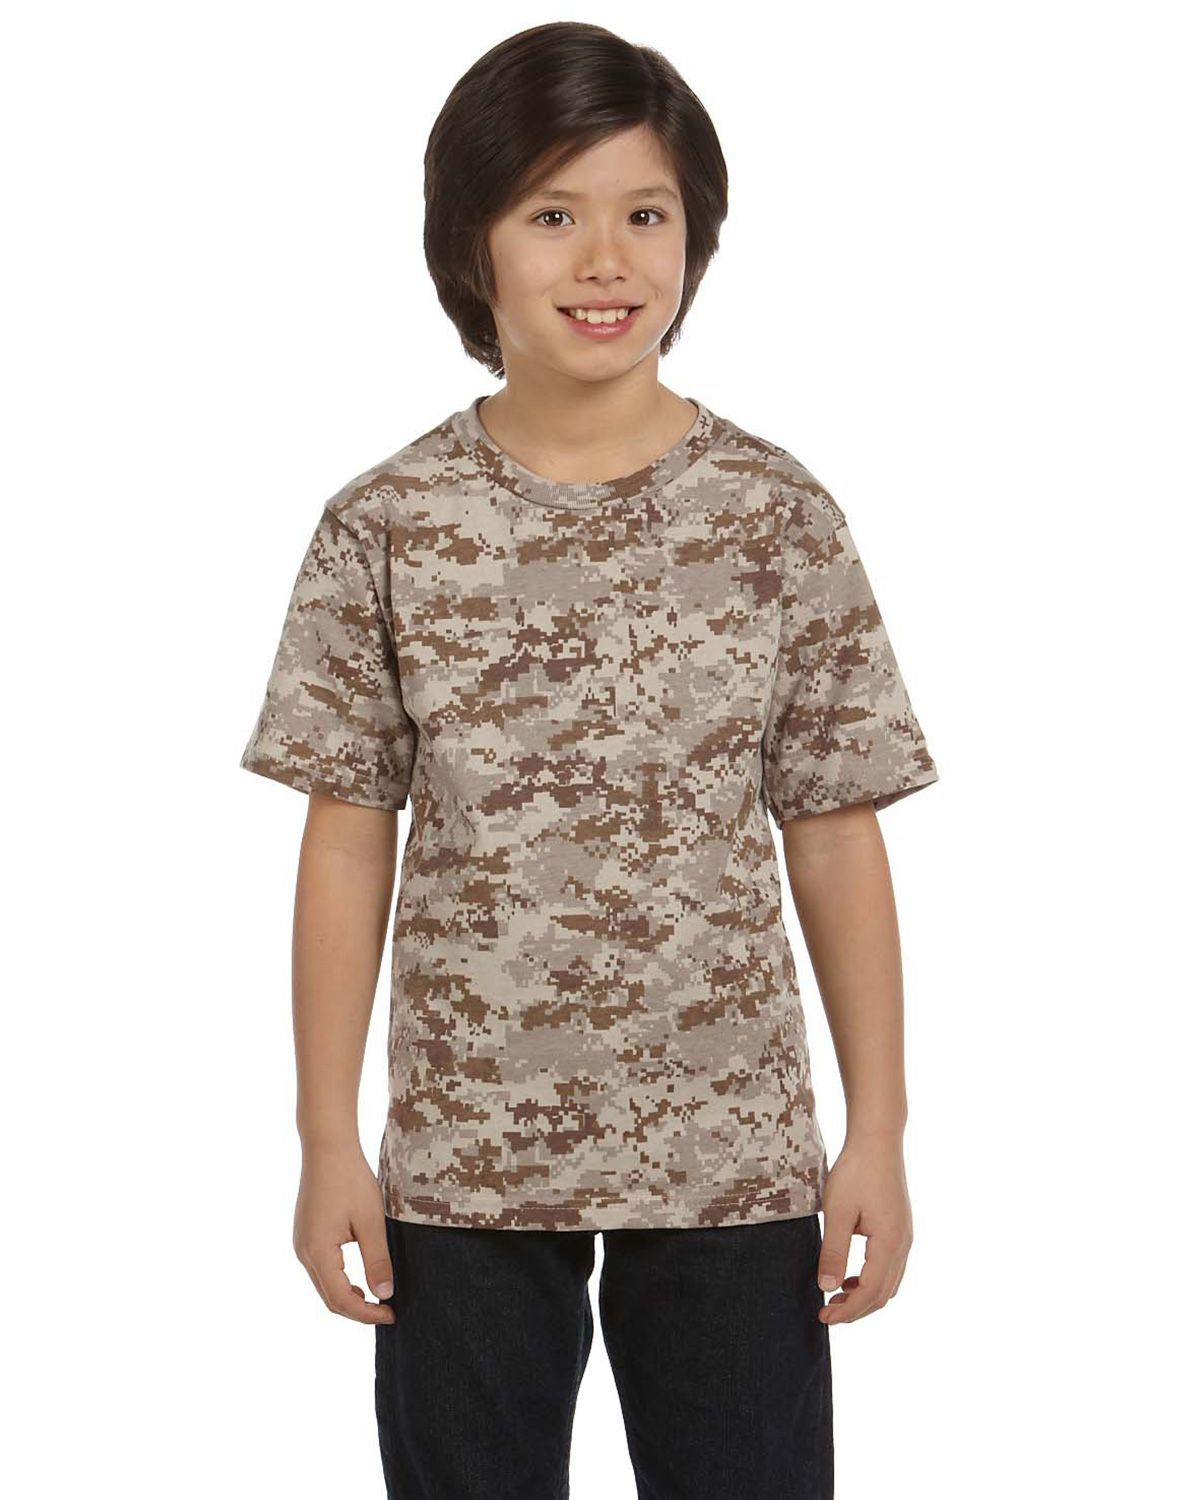  Rothco Kids T-Shirt, Sky Blue Camo, Large : Clothing